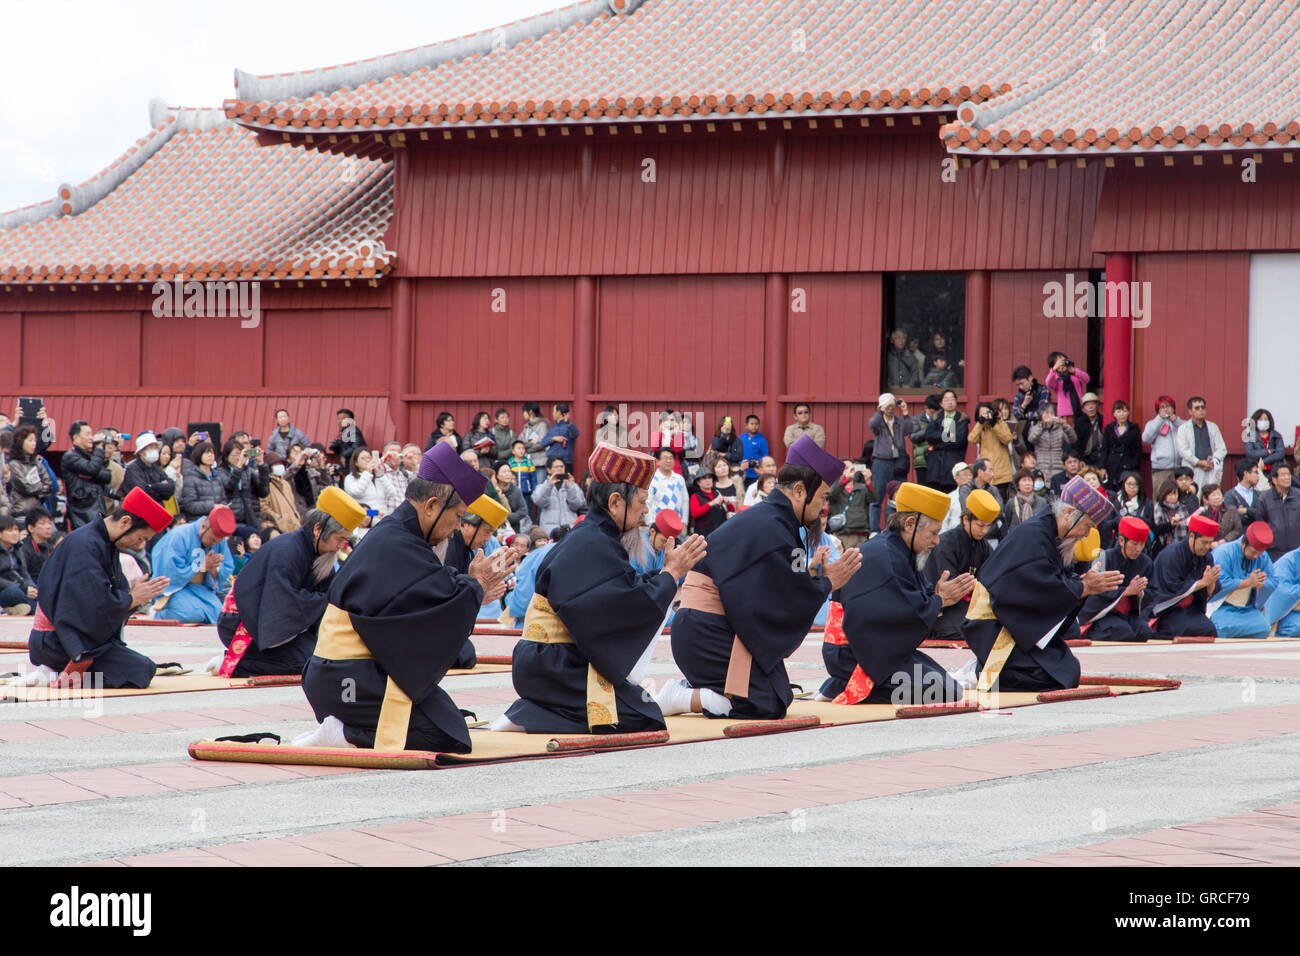 Okinawa, Japan - January 02, 2015: Dressed people at the traditional New Year celebration at Shuri-jo castle. Stock Photo